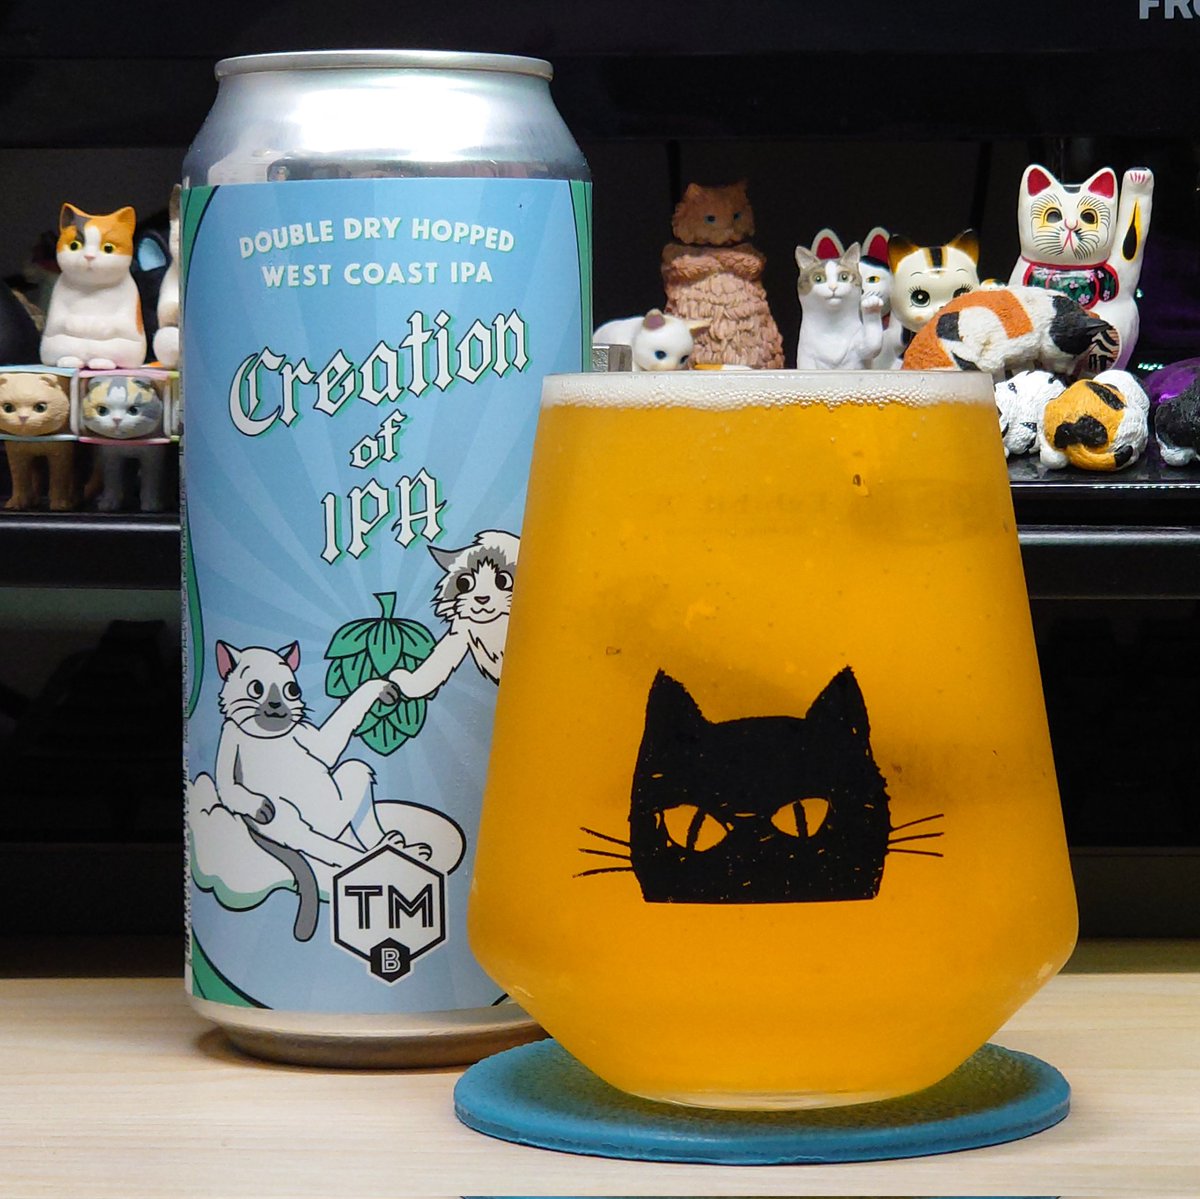 #TrademarkBrewing
『CREATION OF IPA』
ABV 7%
Style:DDH WEST COAST IPA
グレフル皮苦ゴクゴクトロピカル！
#ビール #beer #クラフトビール #craftbeer #酒のスマイル（@sakenosmile_oki） #猫